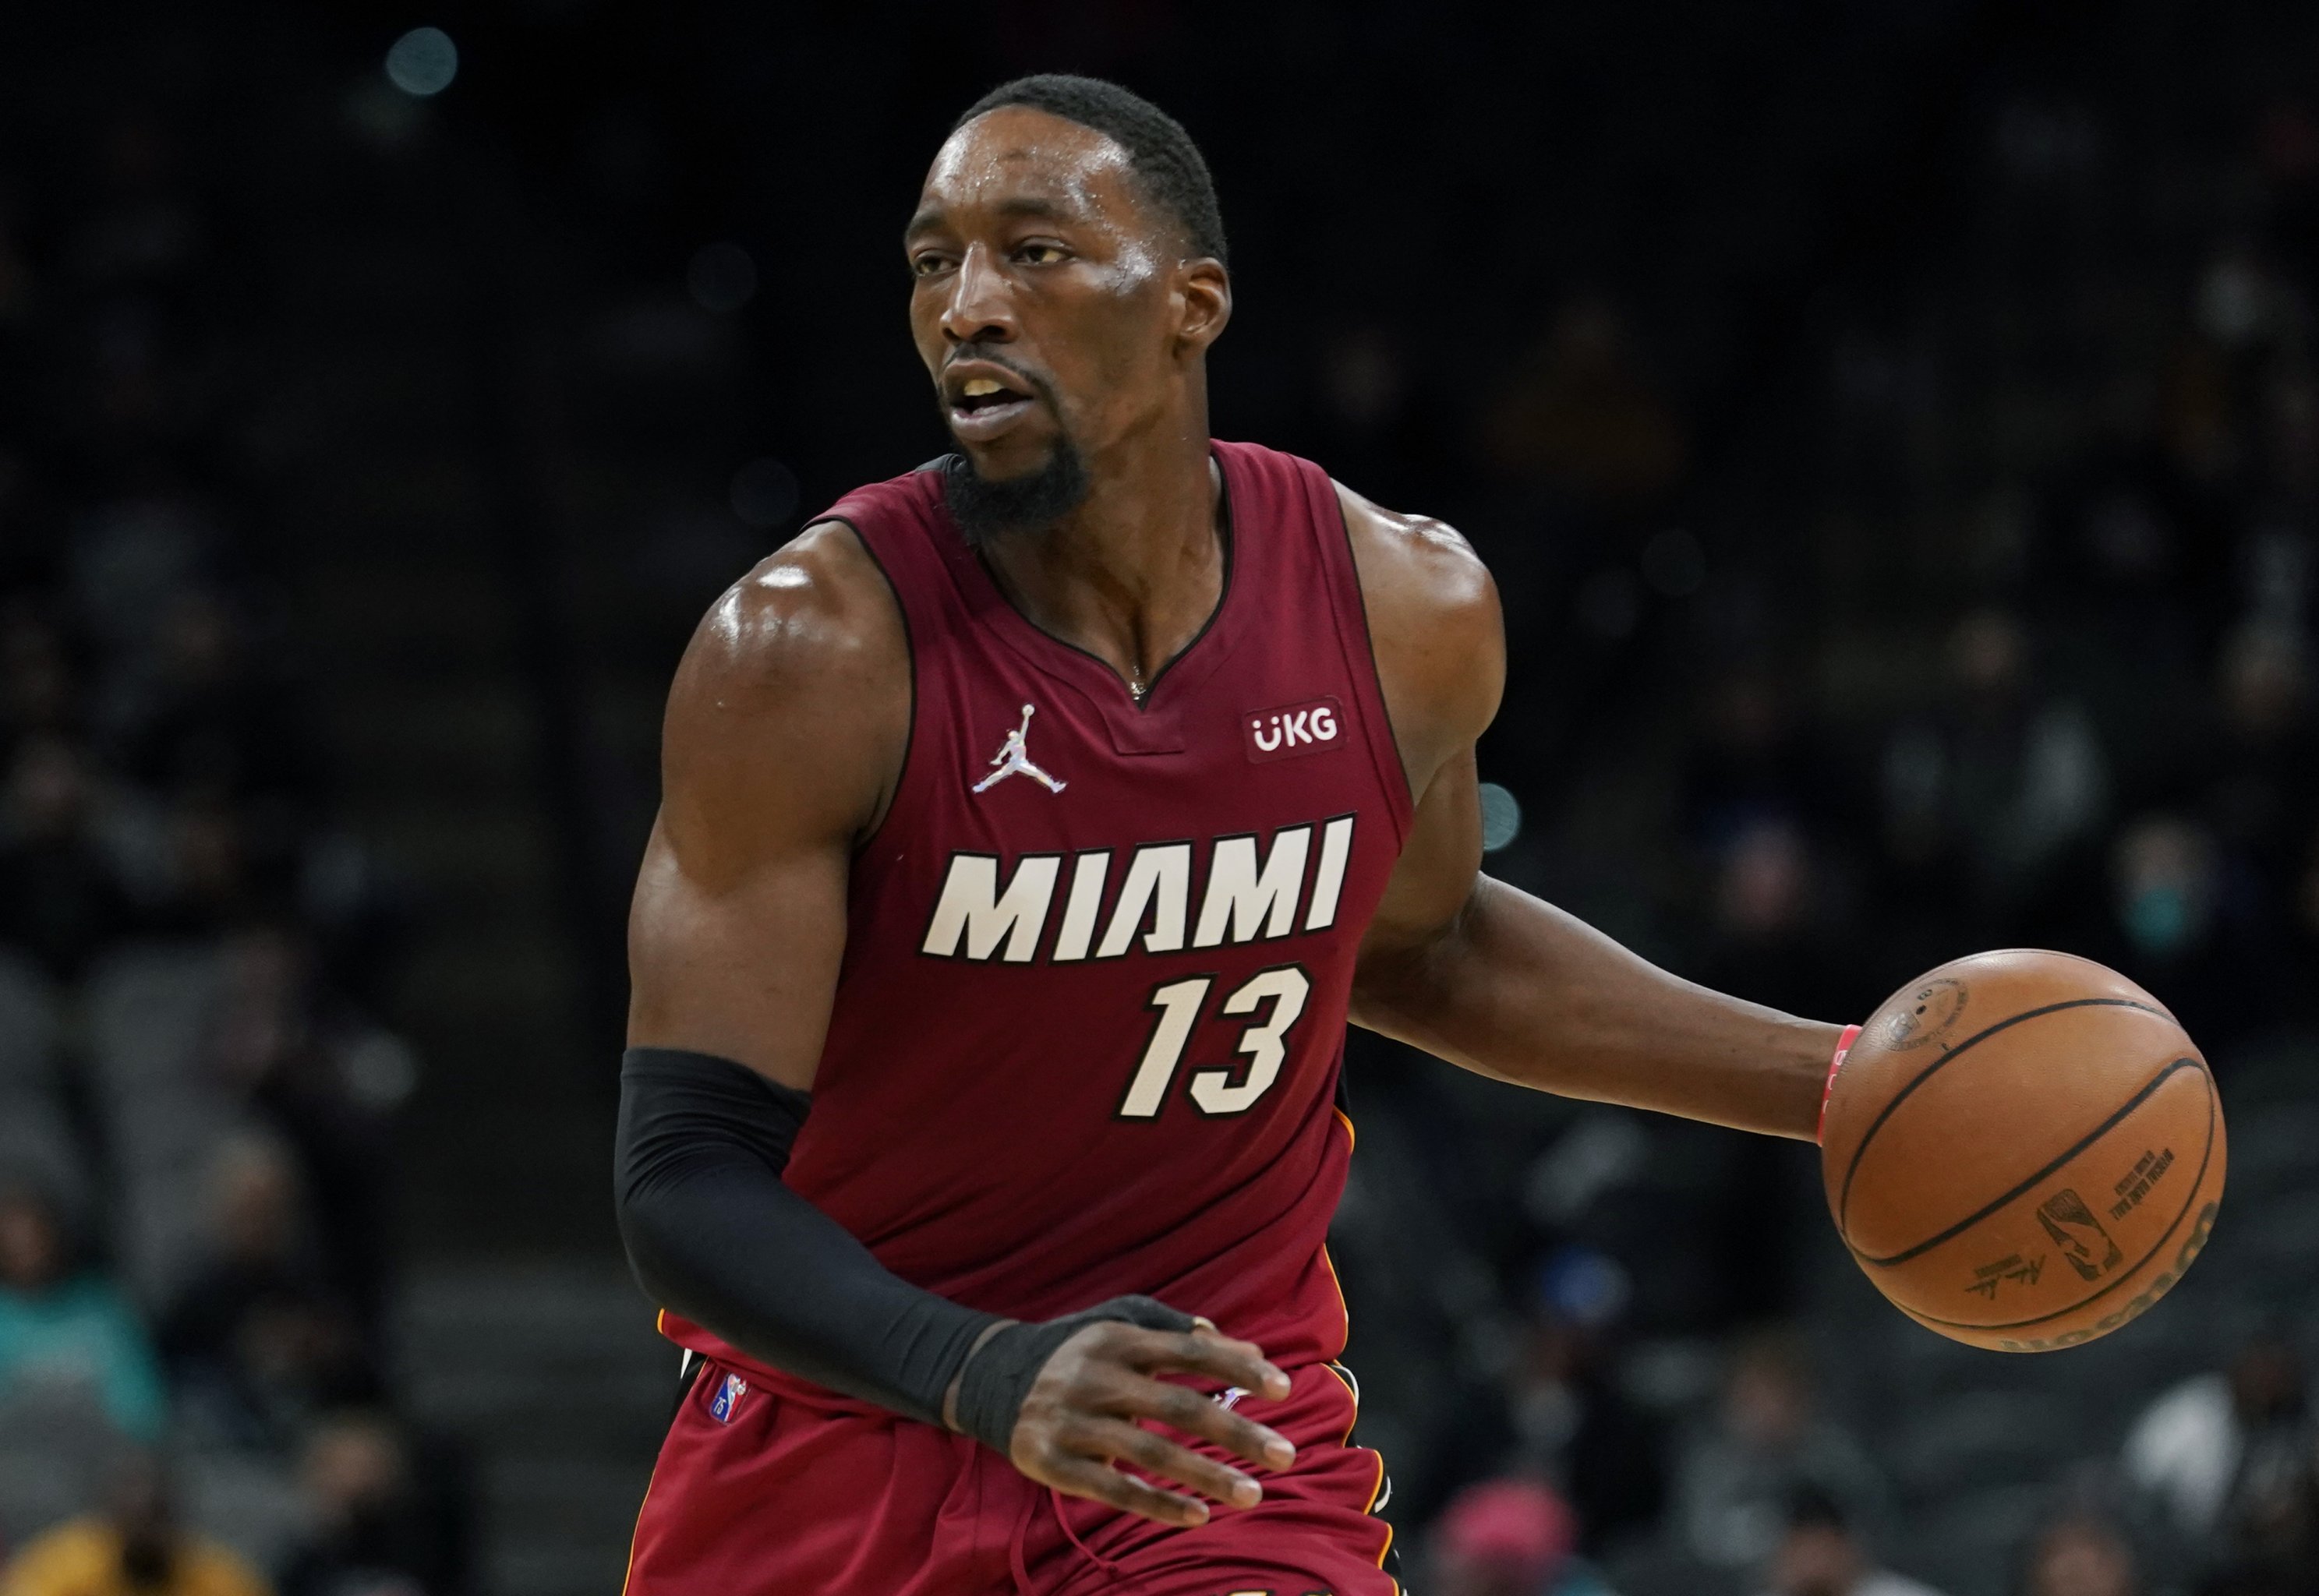 Heat to debut 'Vice' city uniforms Jan. 25 against Kings NBA - Bally Sports